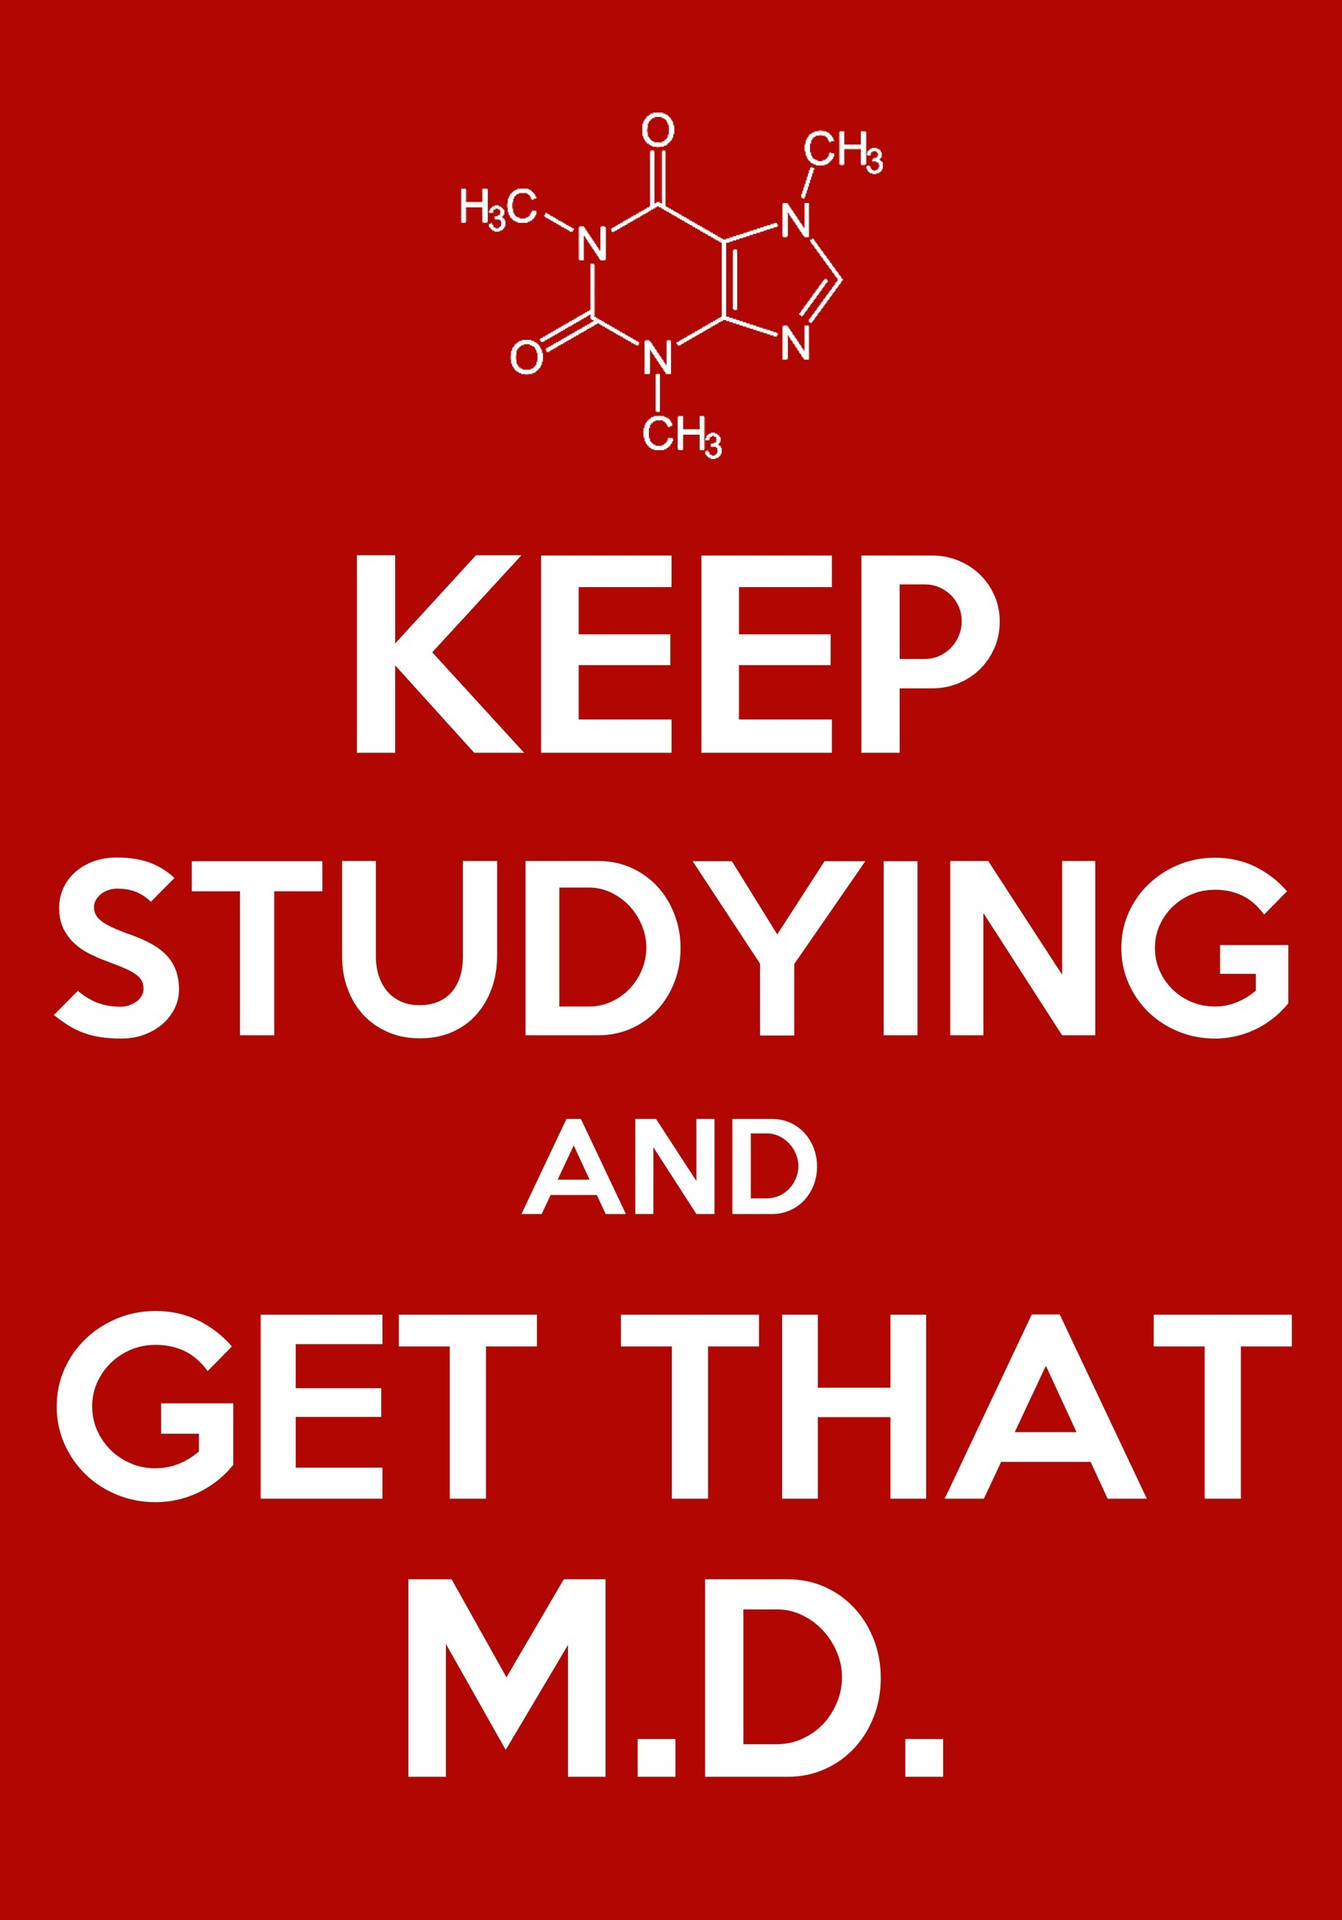 Keep Studying Medical Motivation Poster Wallpaper